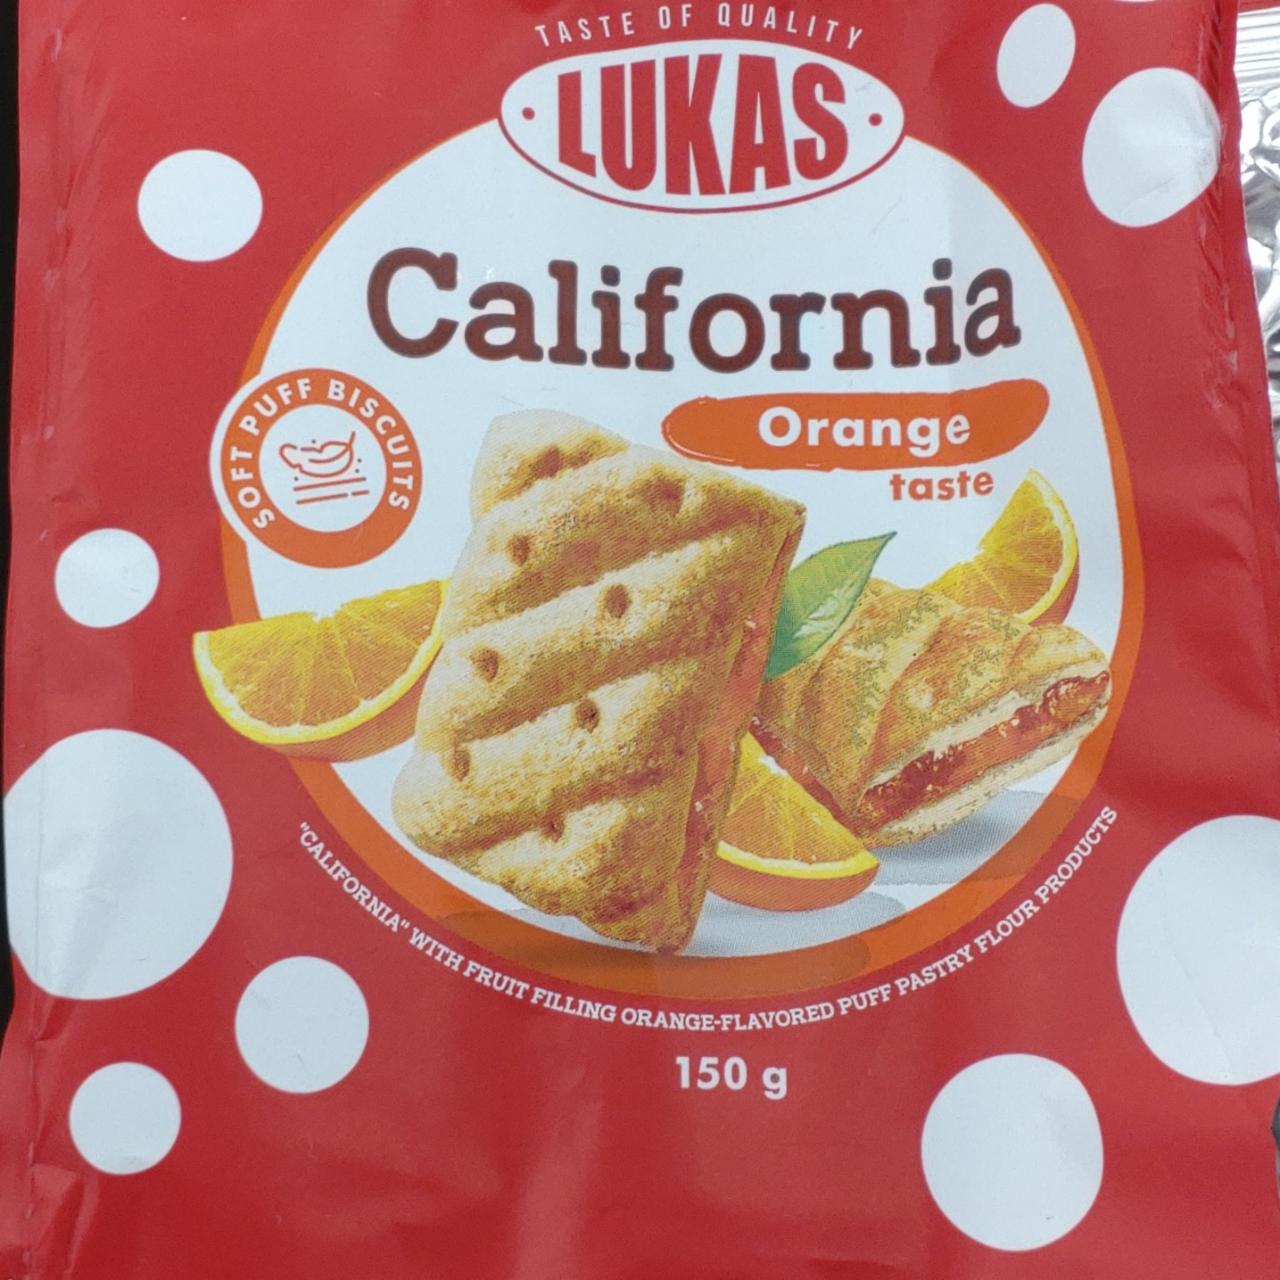 Képek - California orange taste Lukas